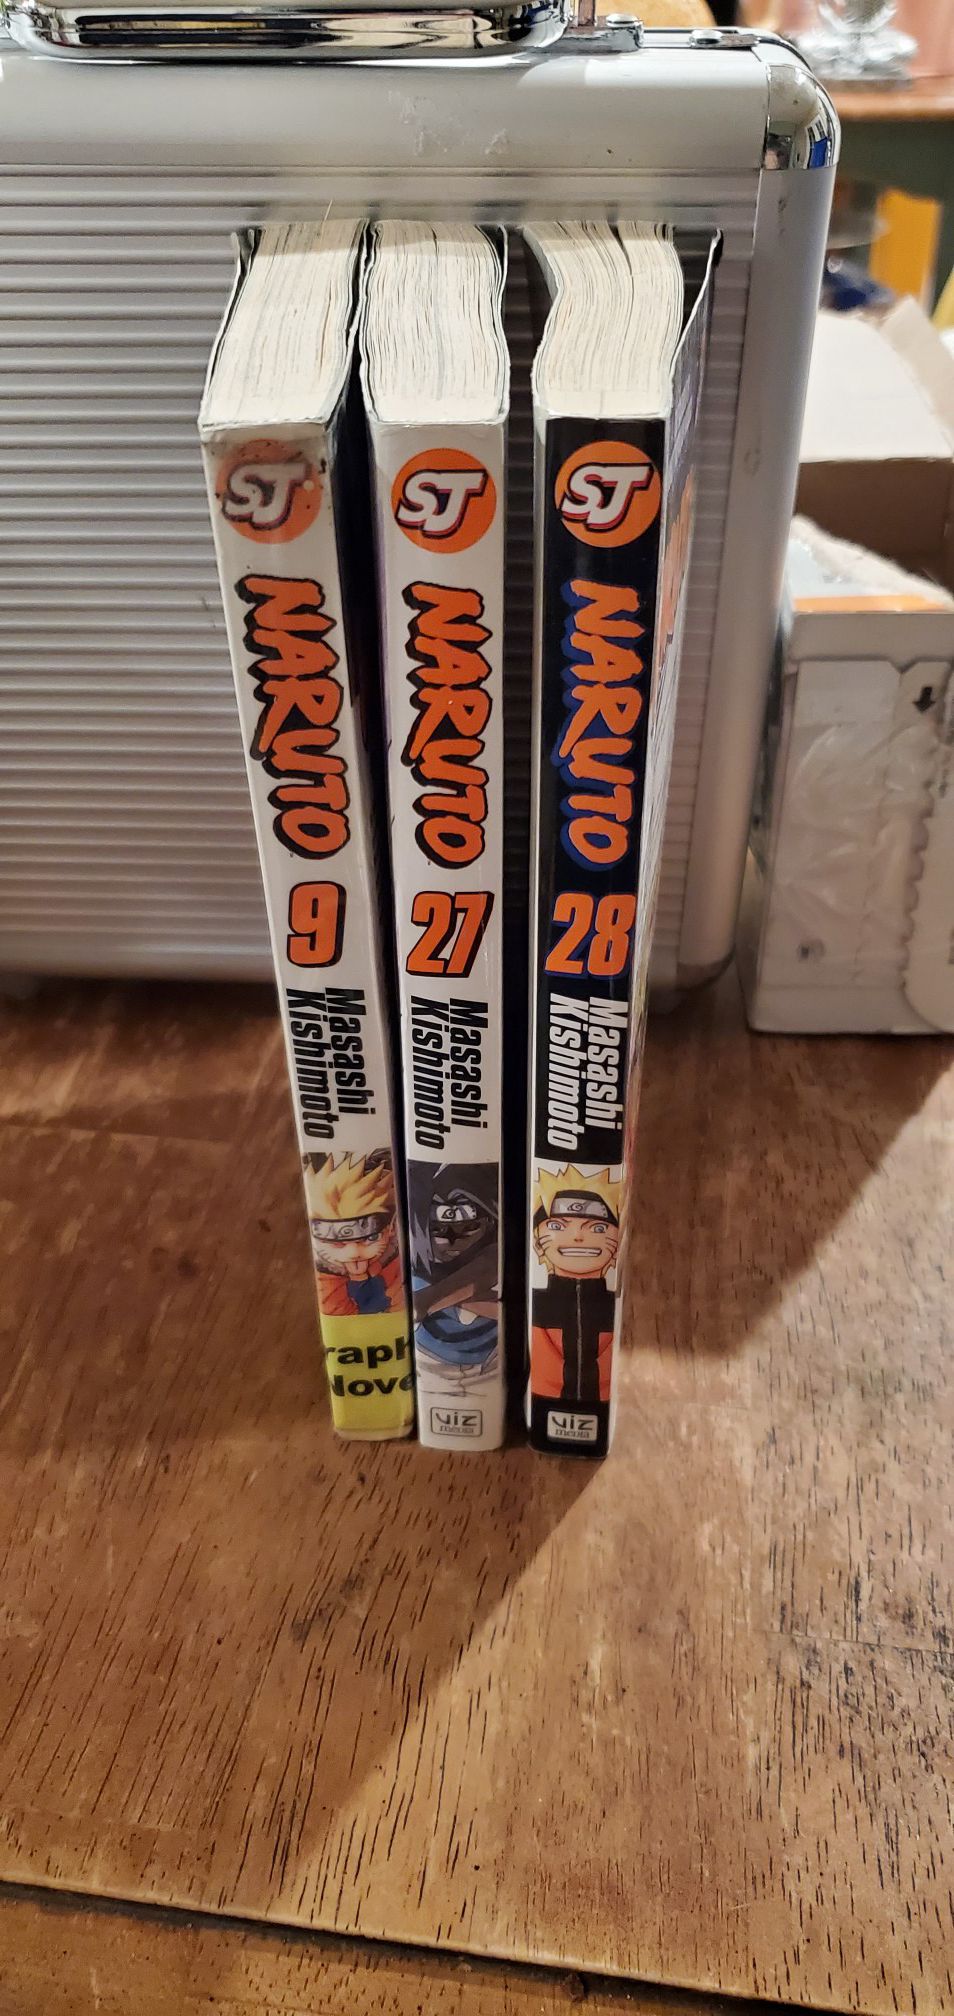 Naruto manga vol 9, 27, 28